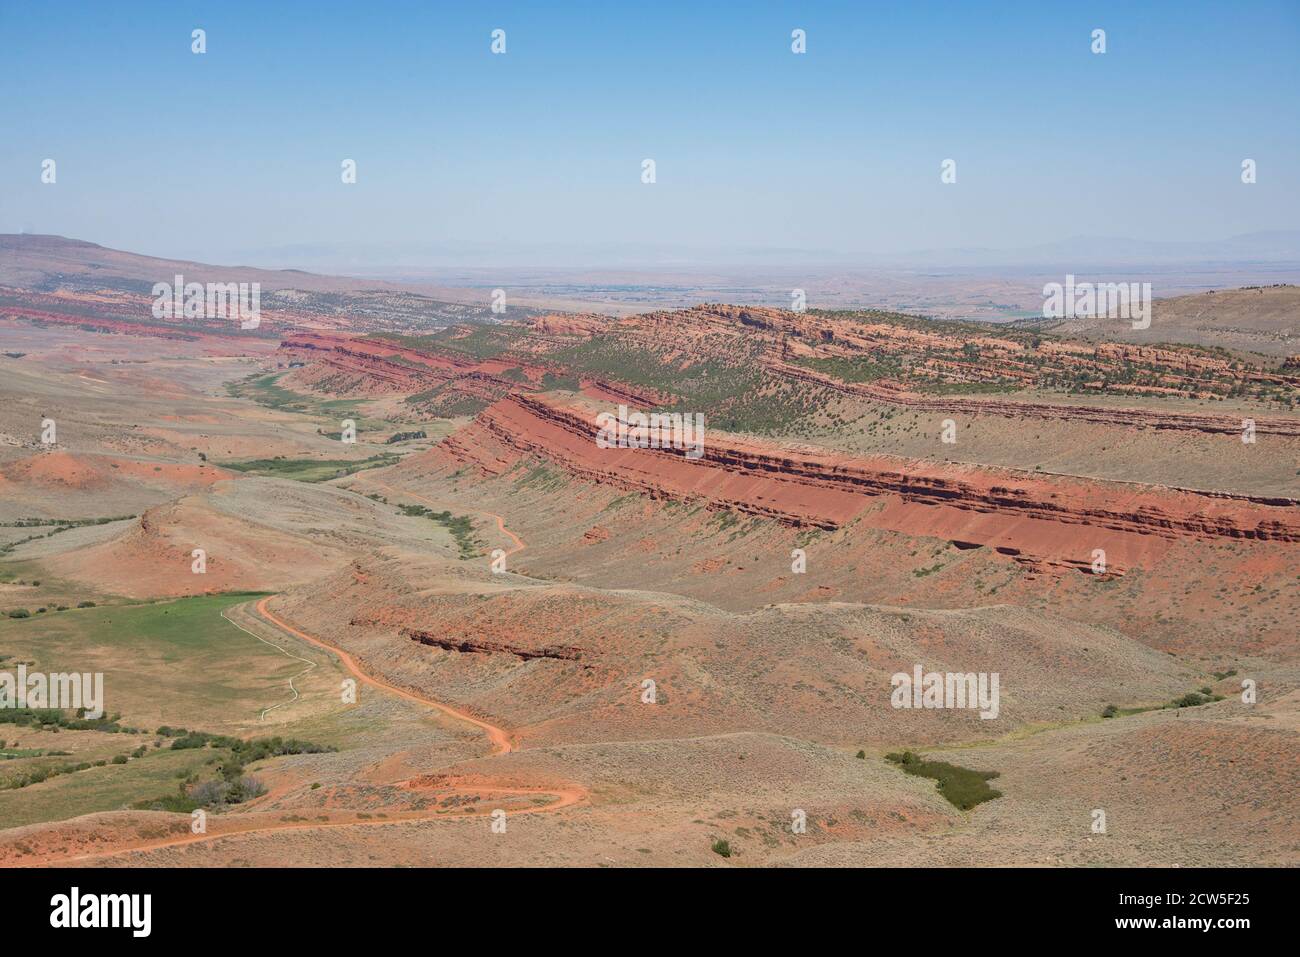 High desert landscape, Lander, Wyoming, USA Stock Photo